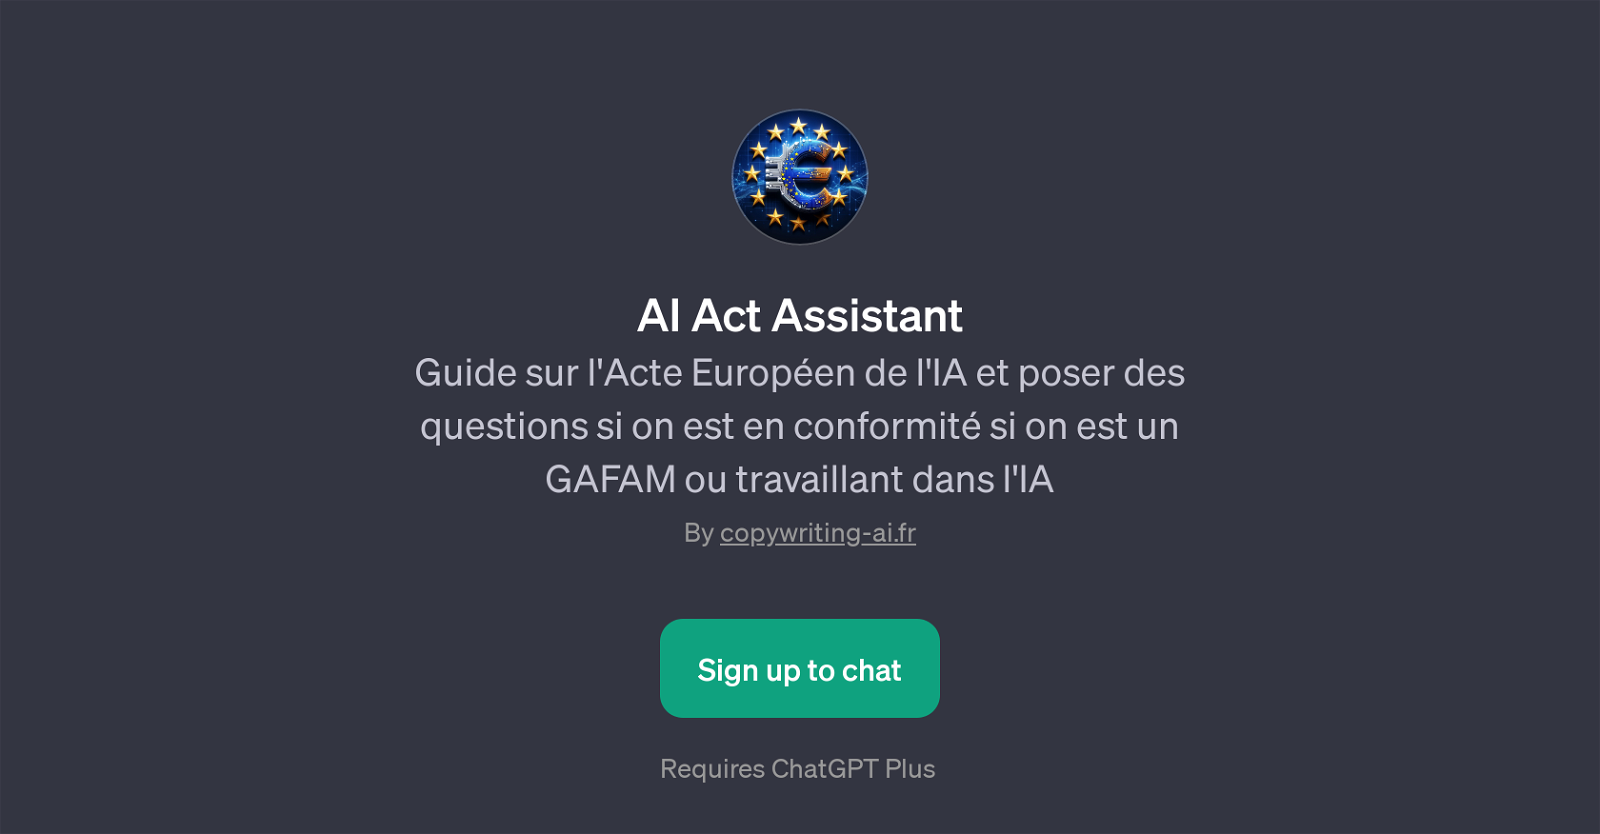 AI Act Assistant website